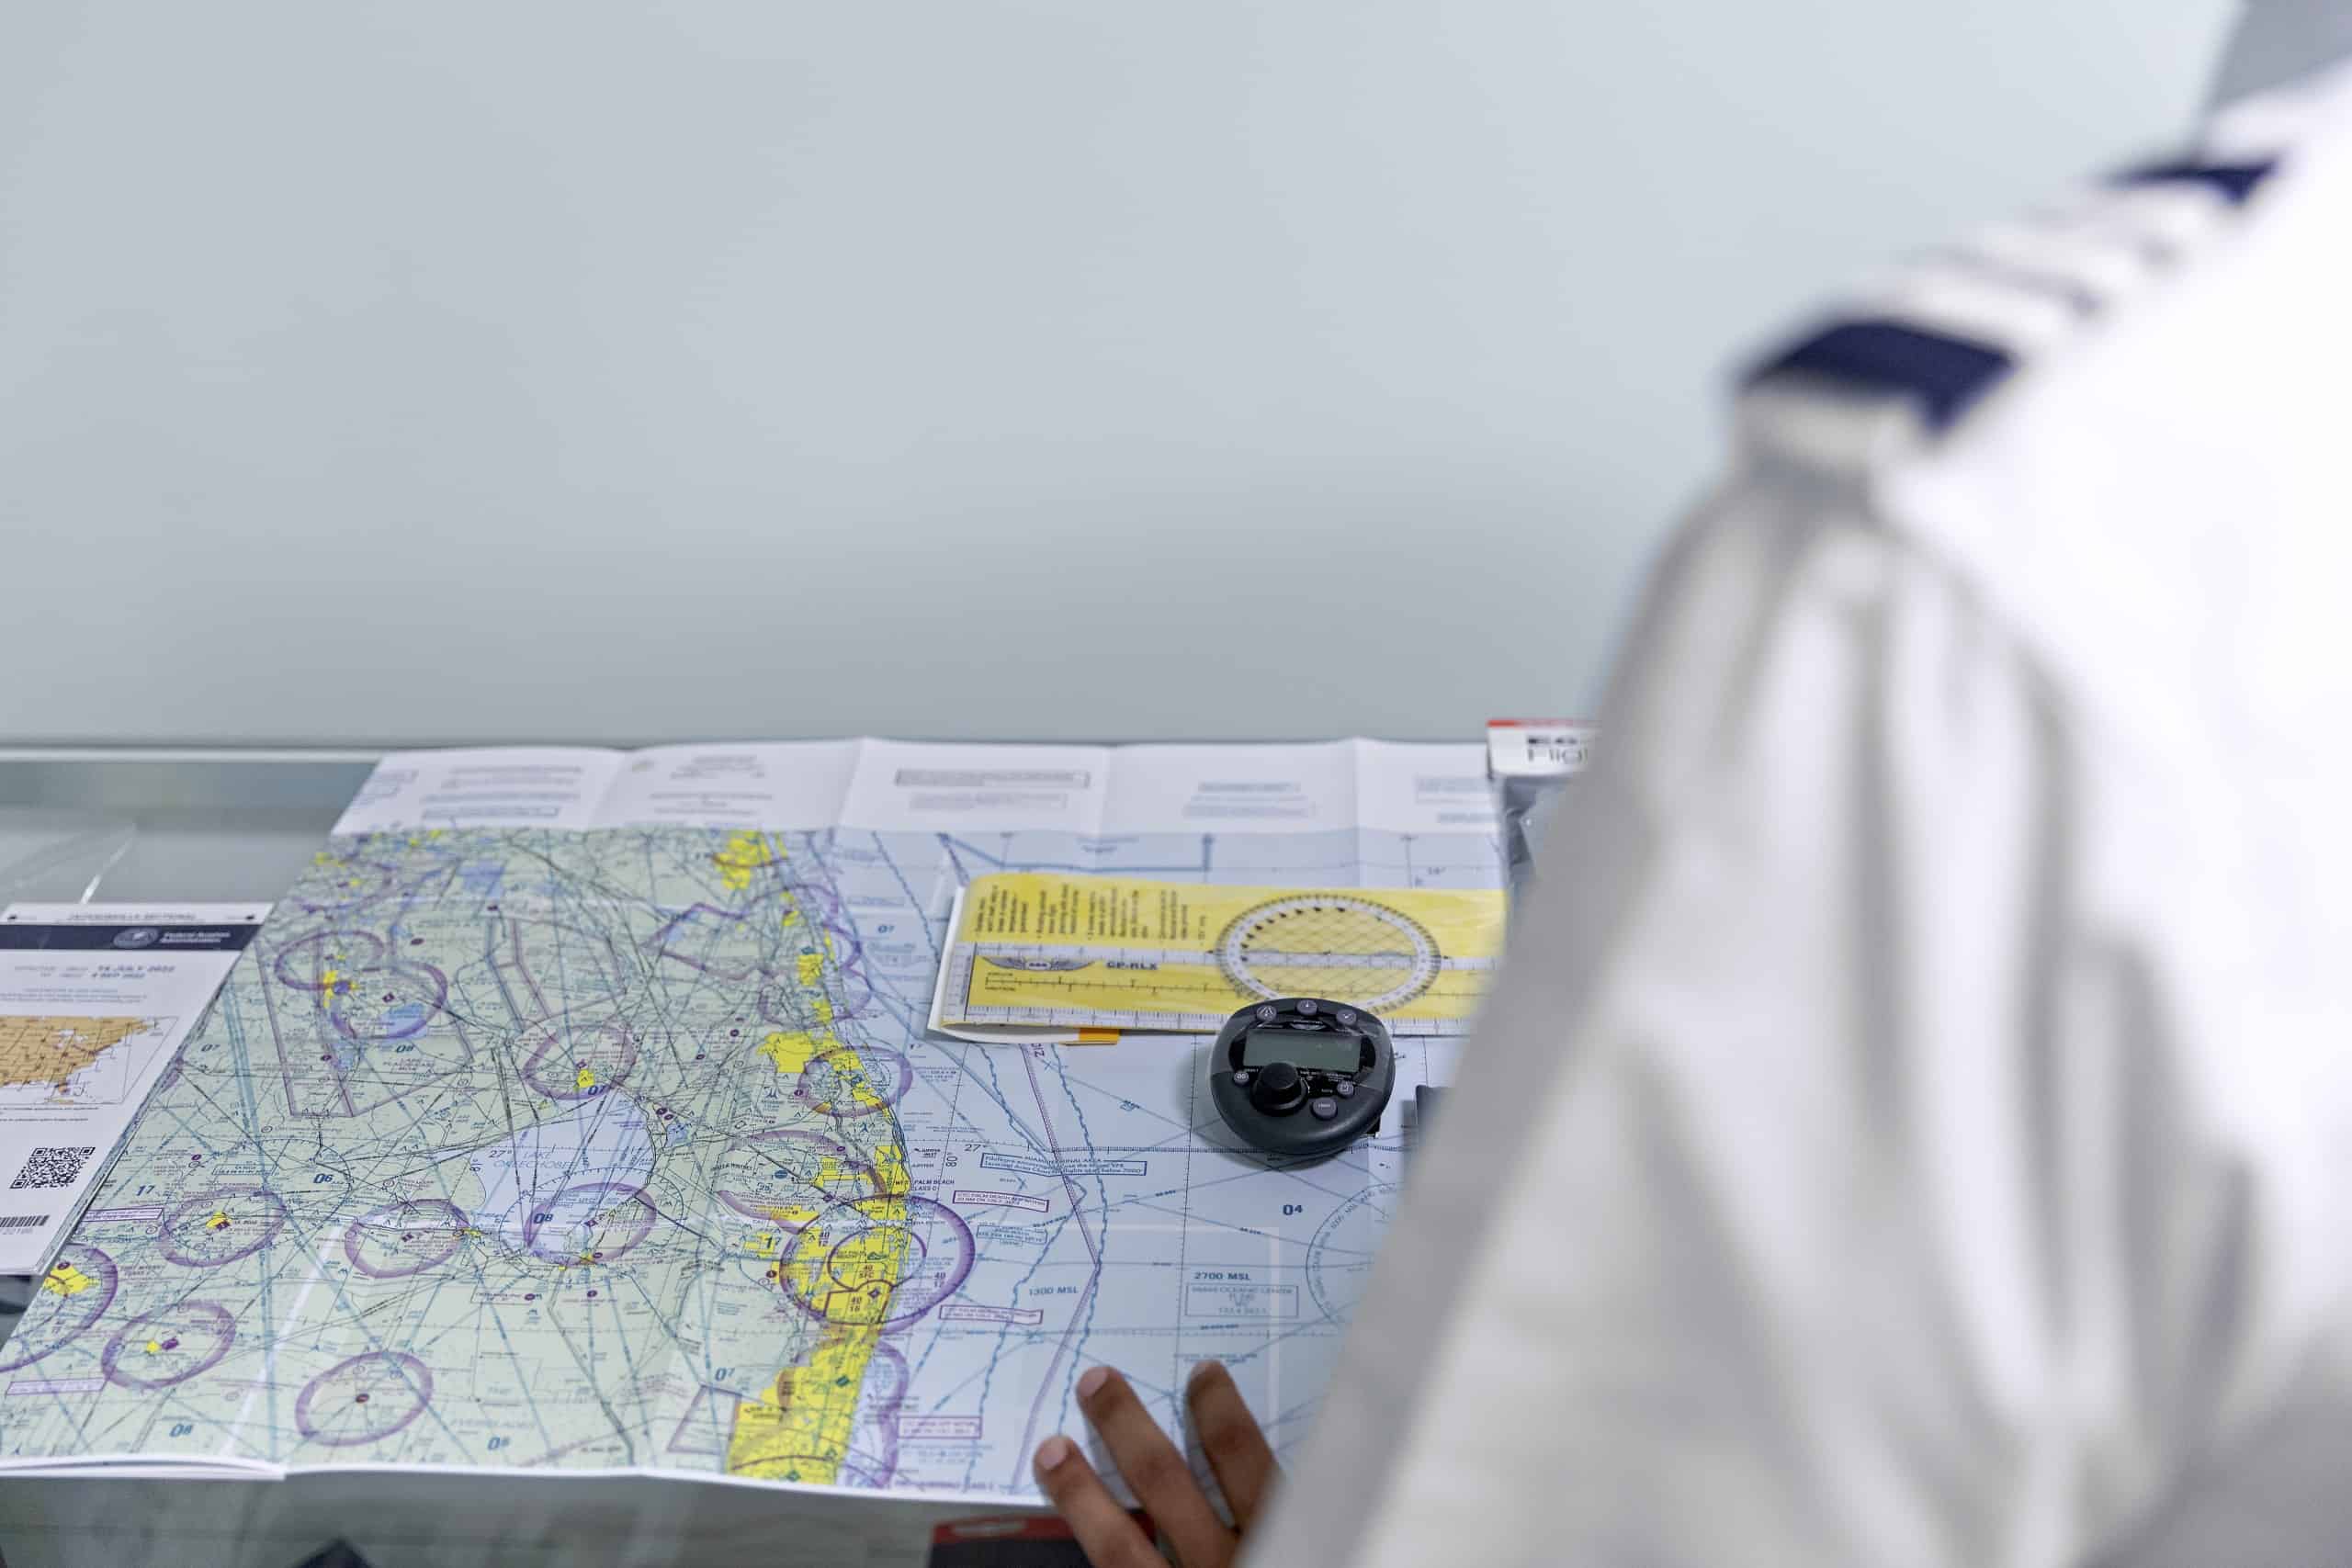 A navigation map and instrument viewed over a pilot's shoulder